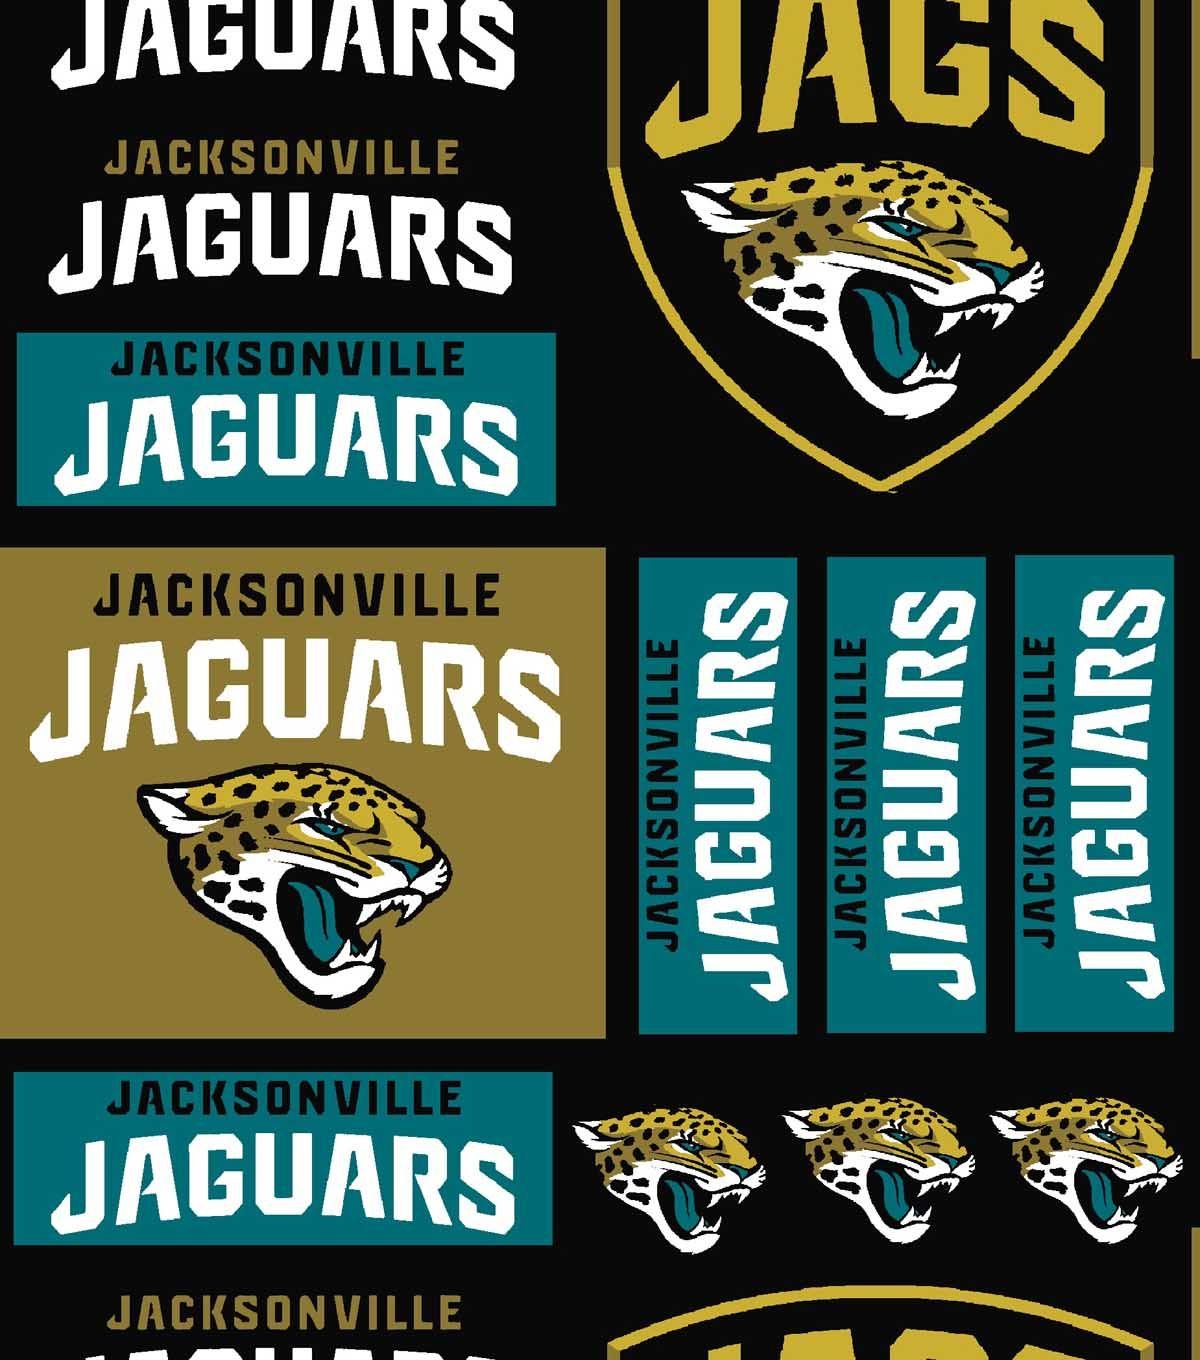 NFL Jaguars Logo - Jacksonville Jaguars NFL Cotton Fabric